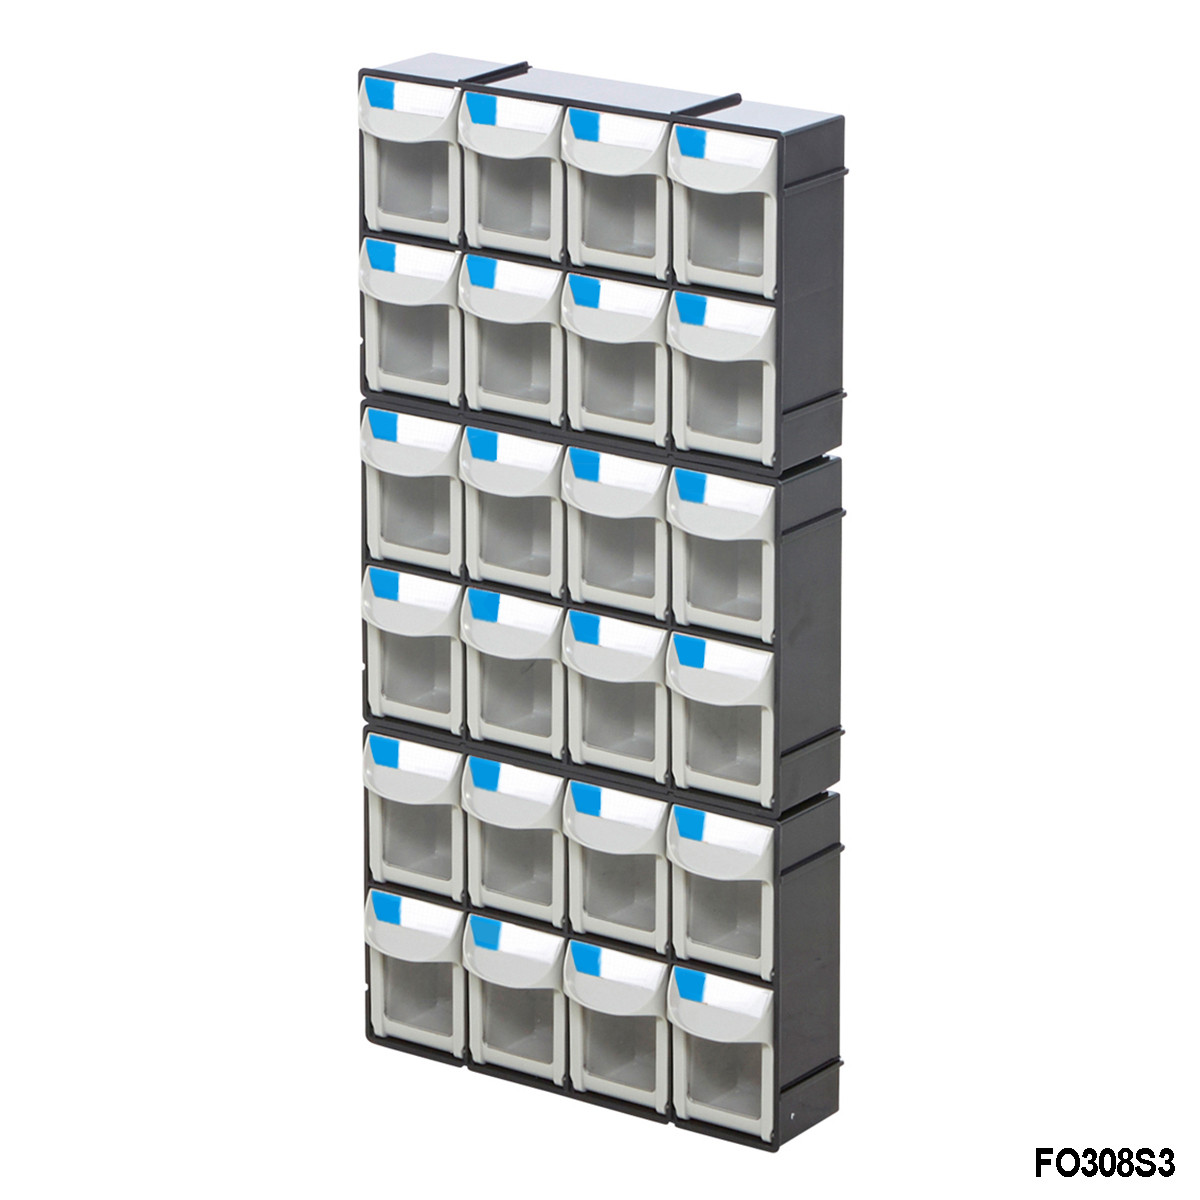 Best ideas about Garage Storage Bins
. Save or Pin Plastic Parts Bin Tilt Bins Small Parts Tools Storage Now.